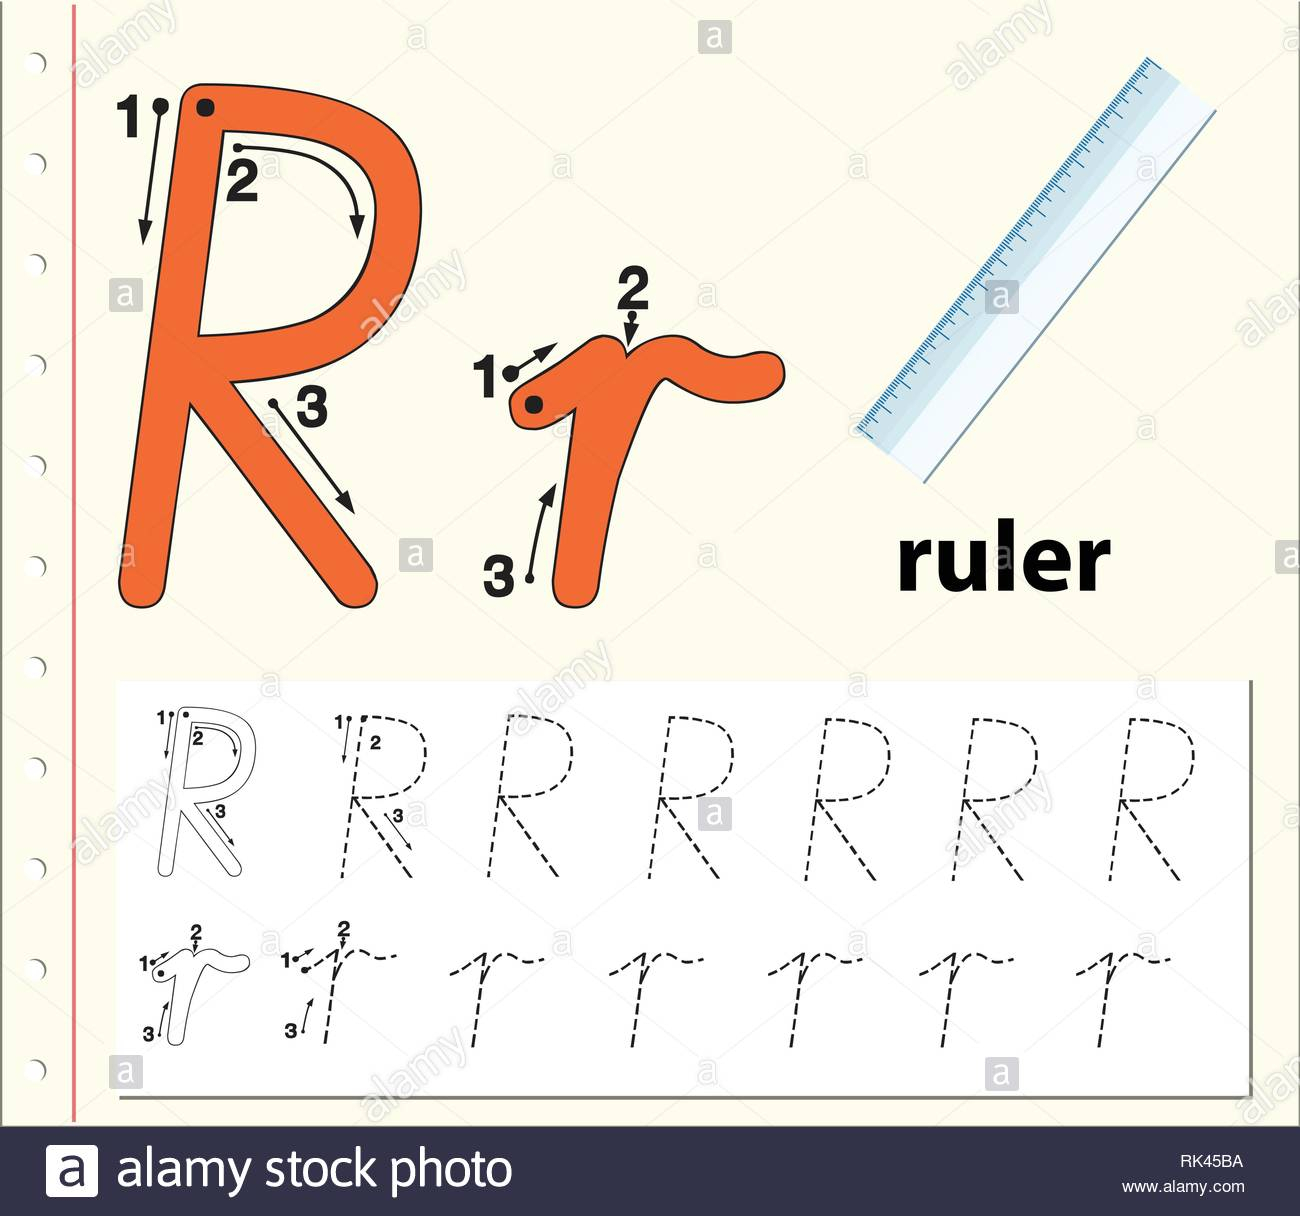 Letter R Tracing Alphabet Worksheets Illustration Stock regarding Alphabet Tracing Ruler